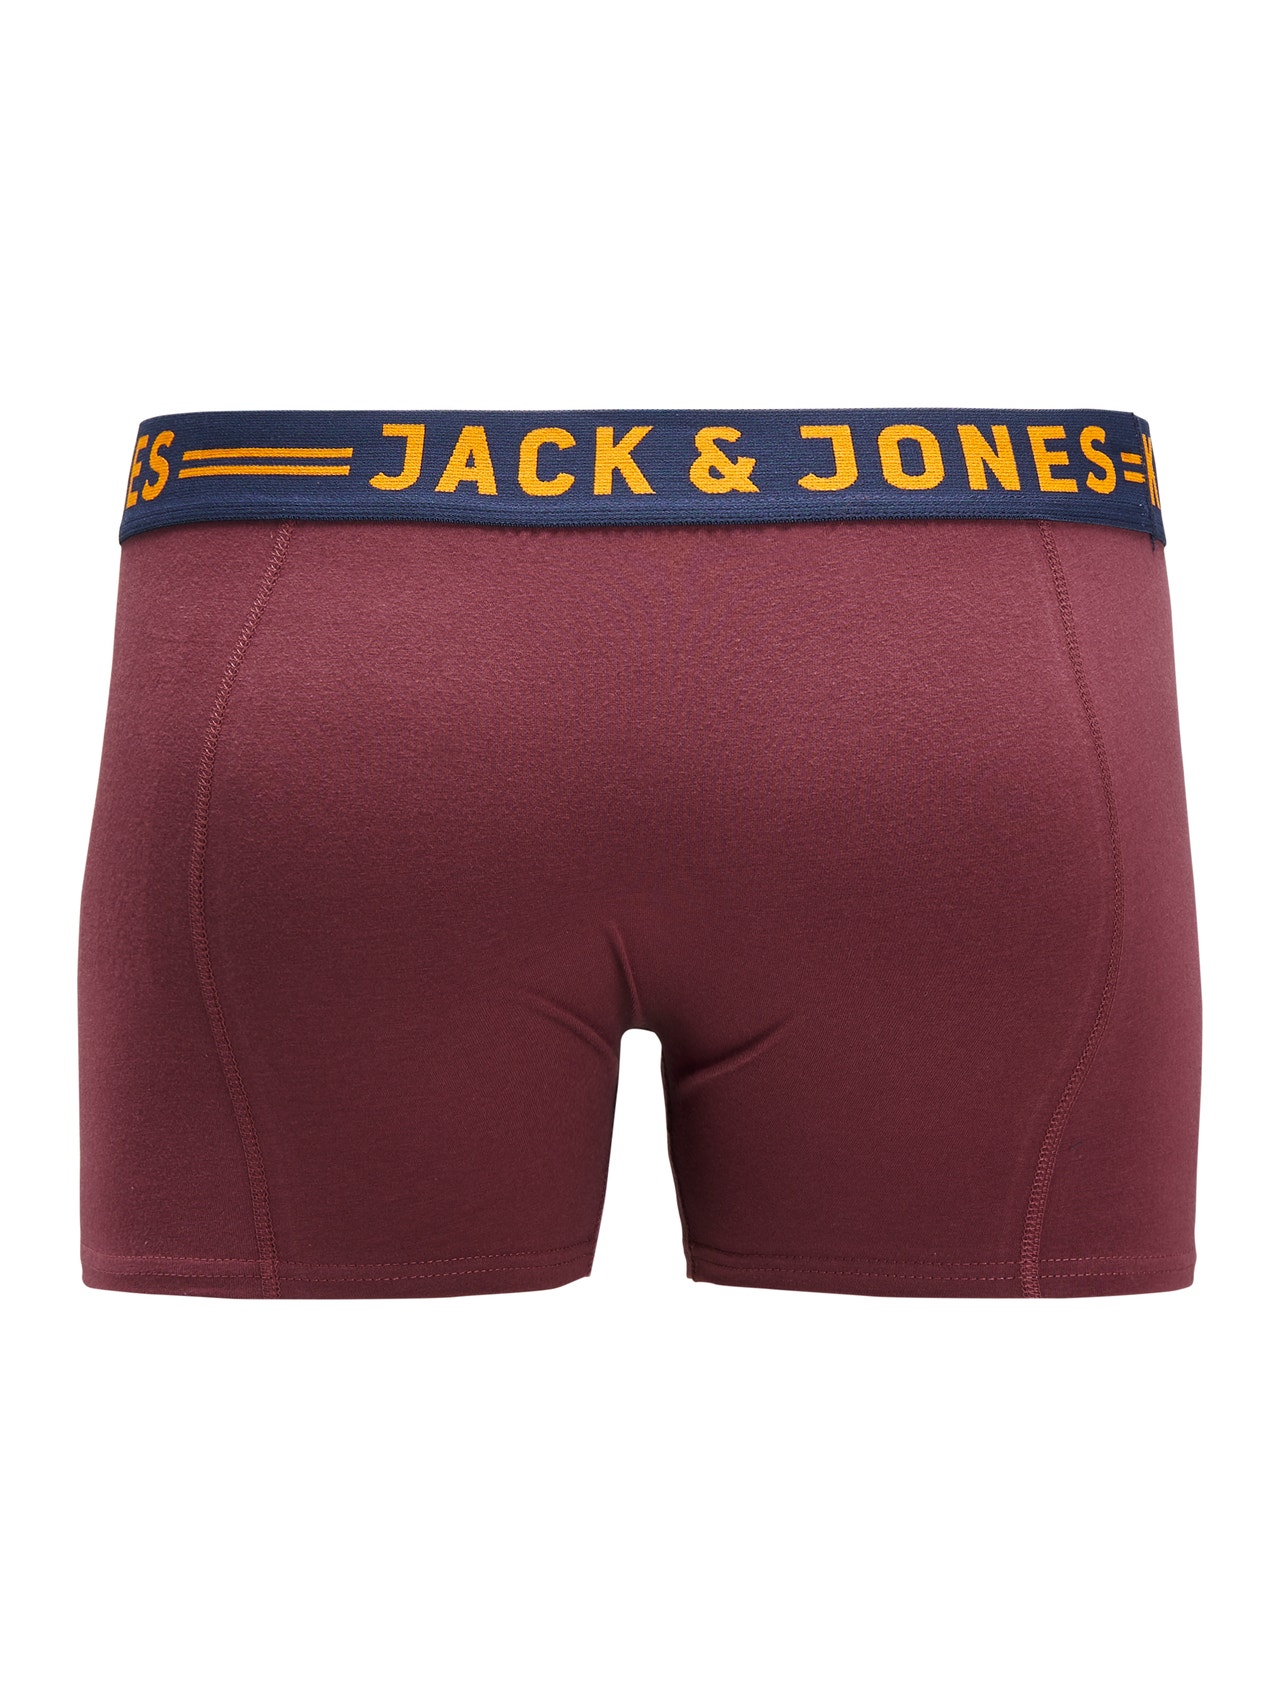 Jack & Jones Plus Size 3-pack Boxershorts -Burgundy - 12147592